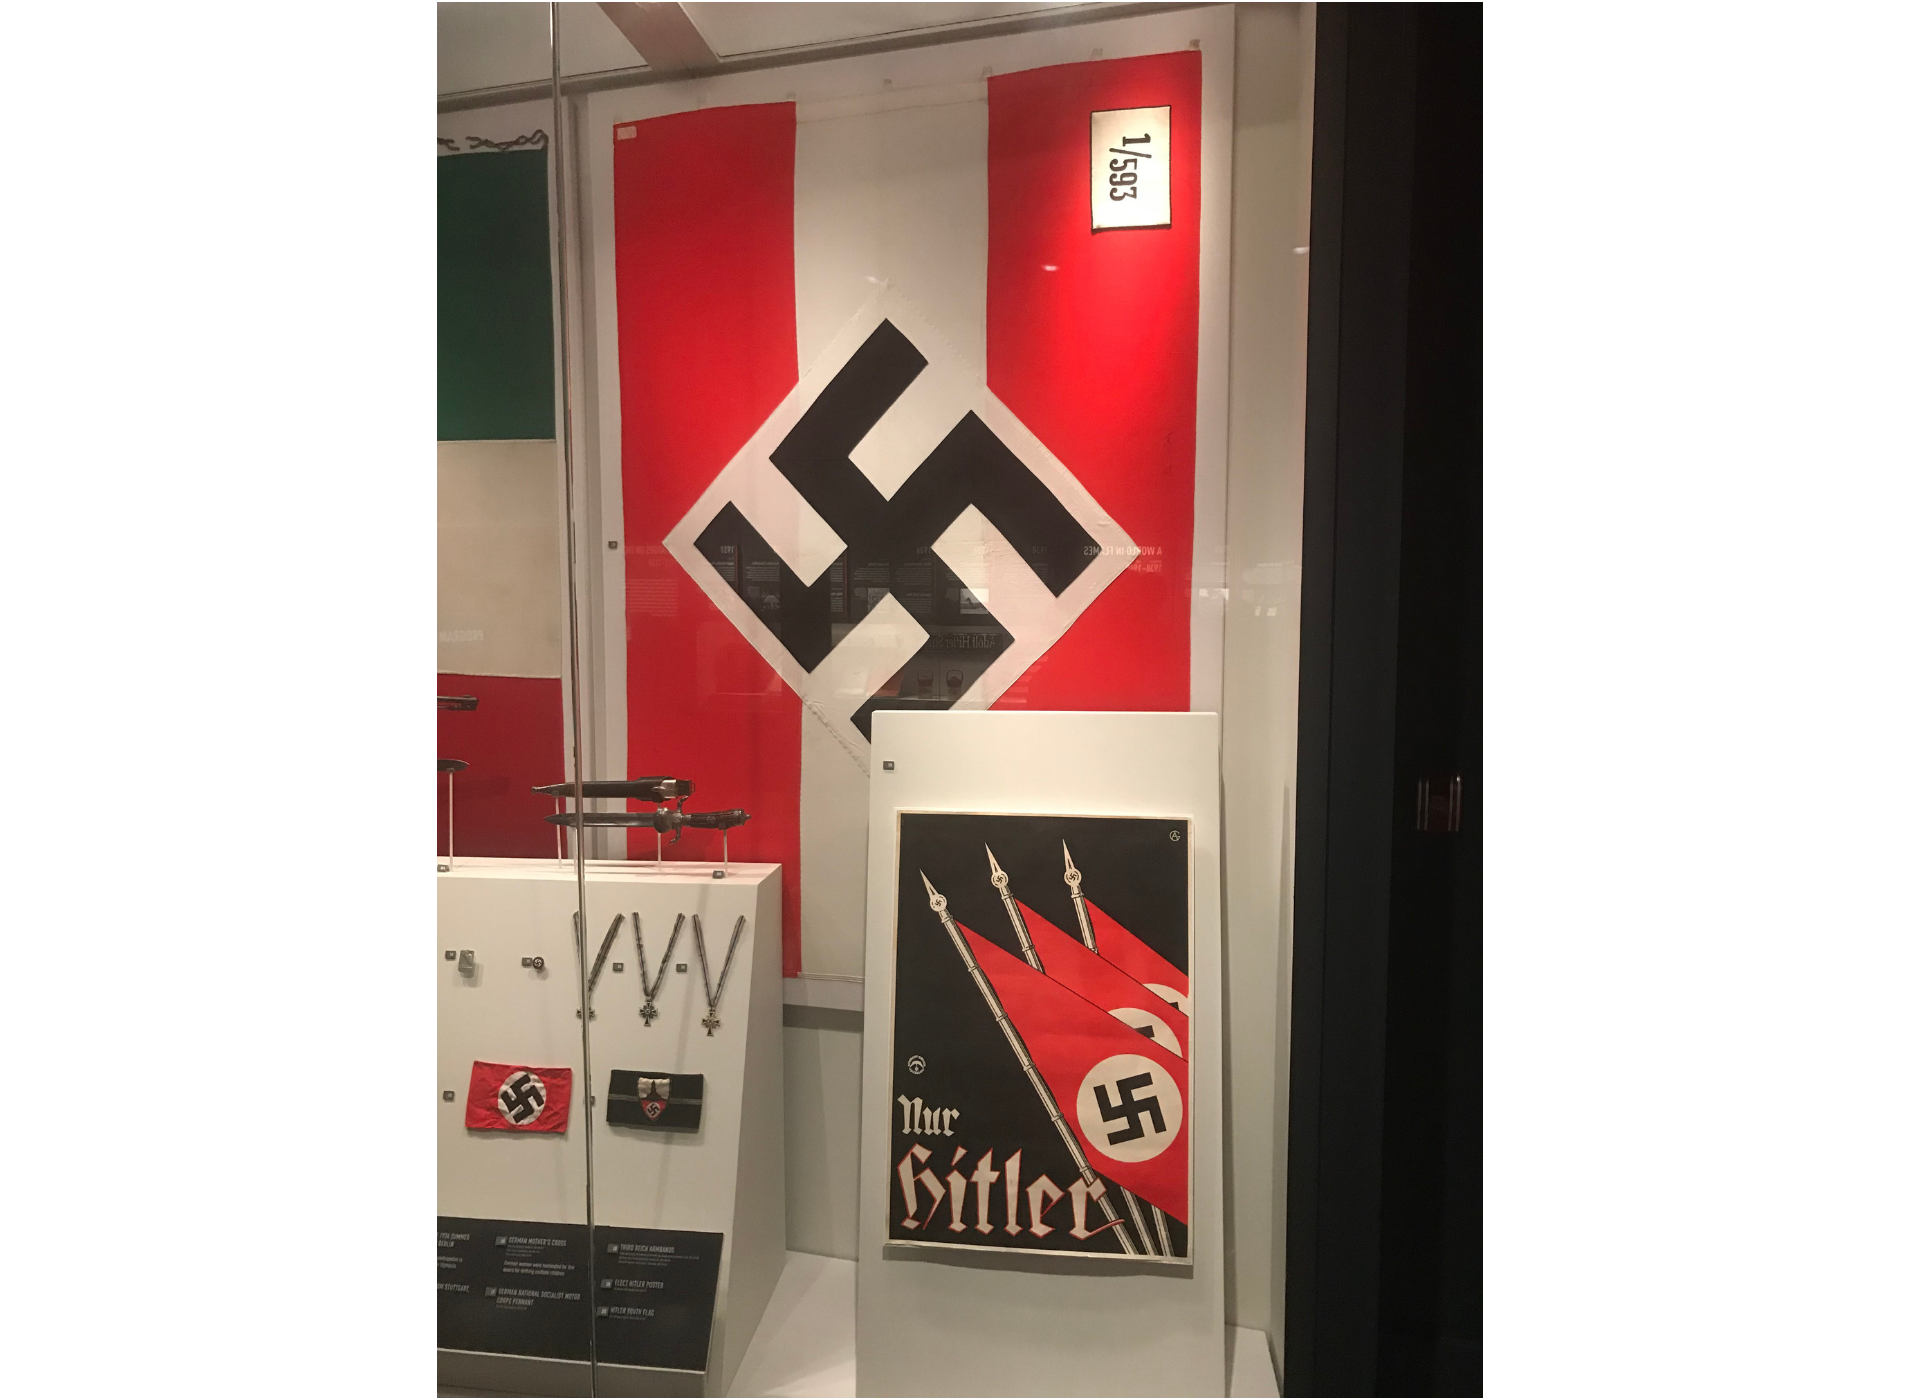 Anschluss with Austria